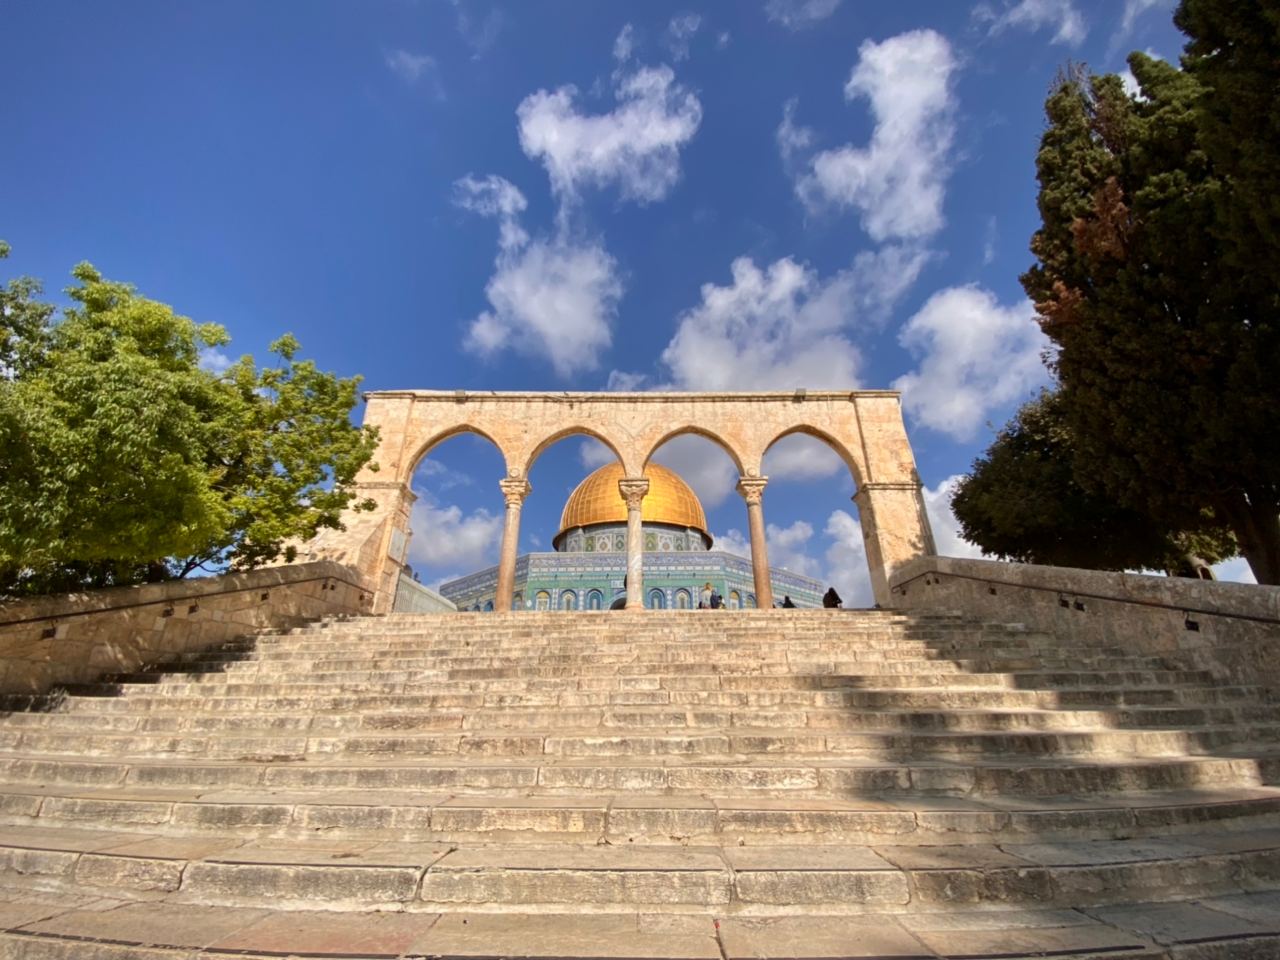 Al-Aqsa Mosque in pictures